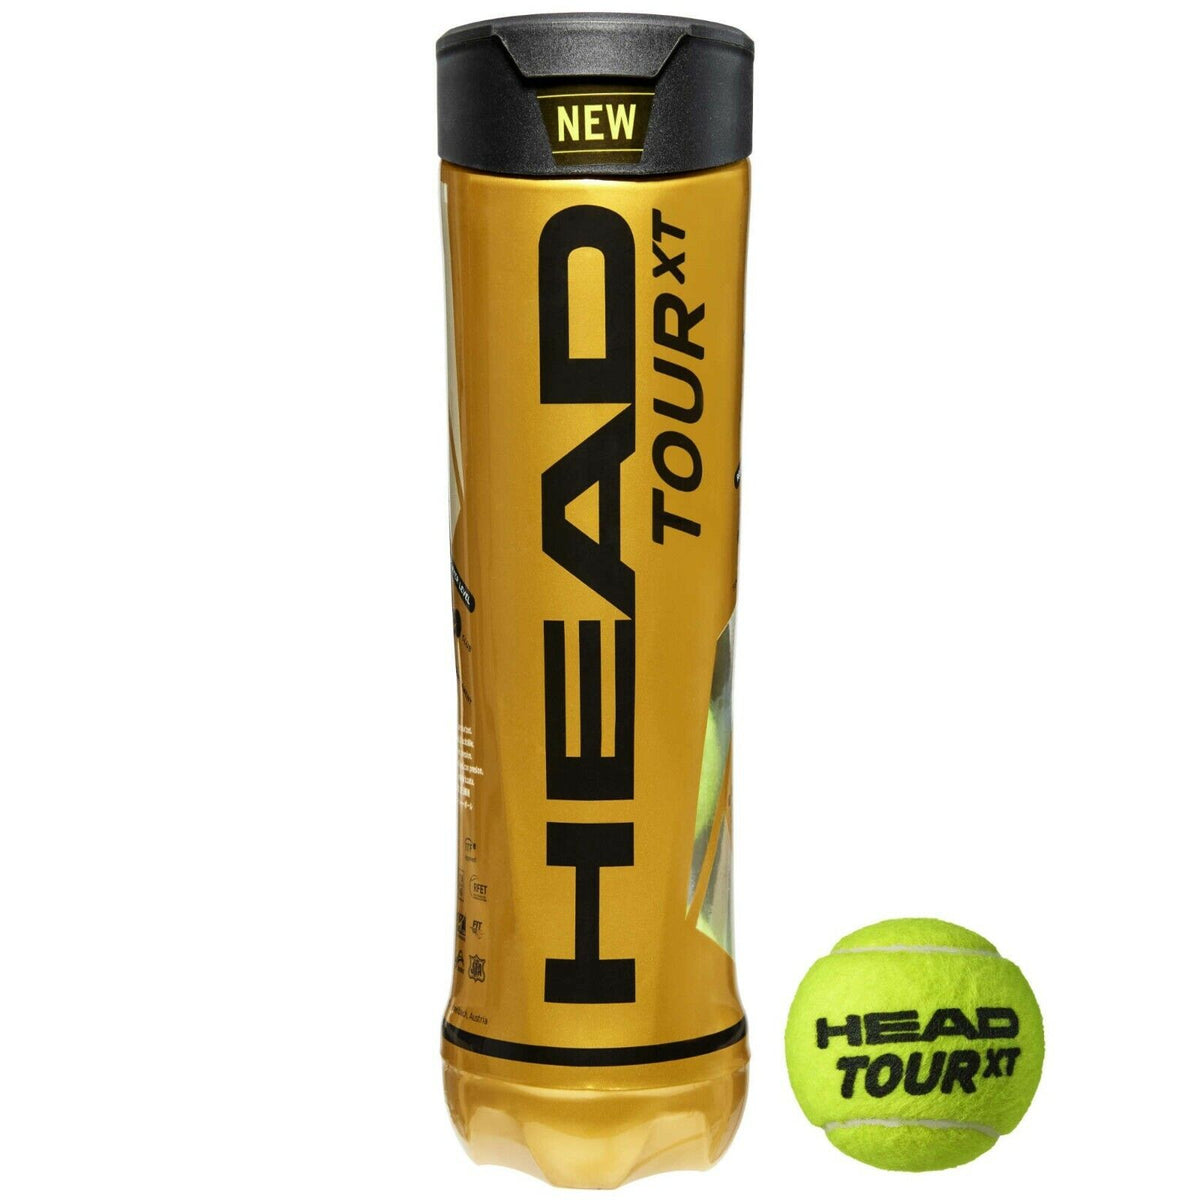 Head Tour XT 570834 (4 ball tube) YELLOW